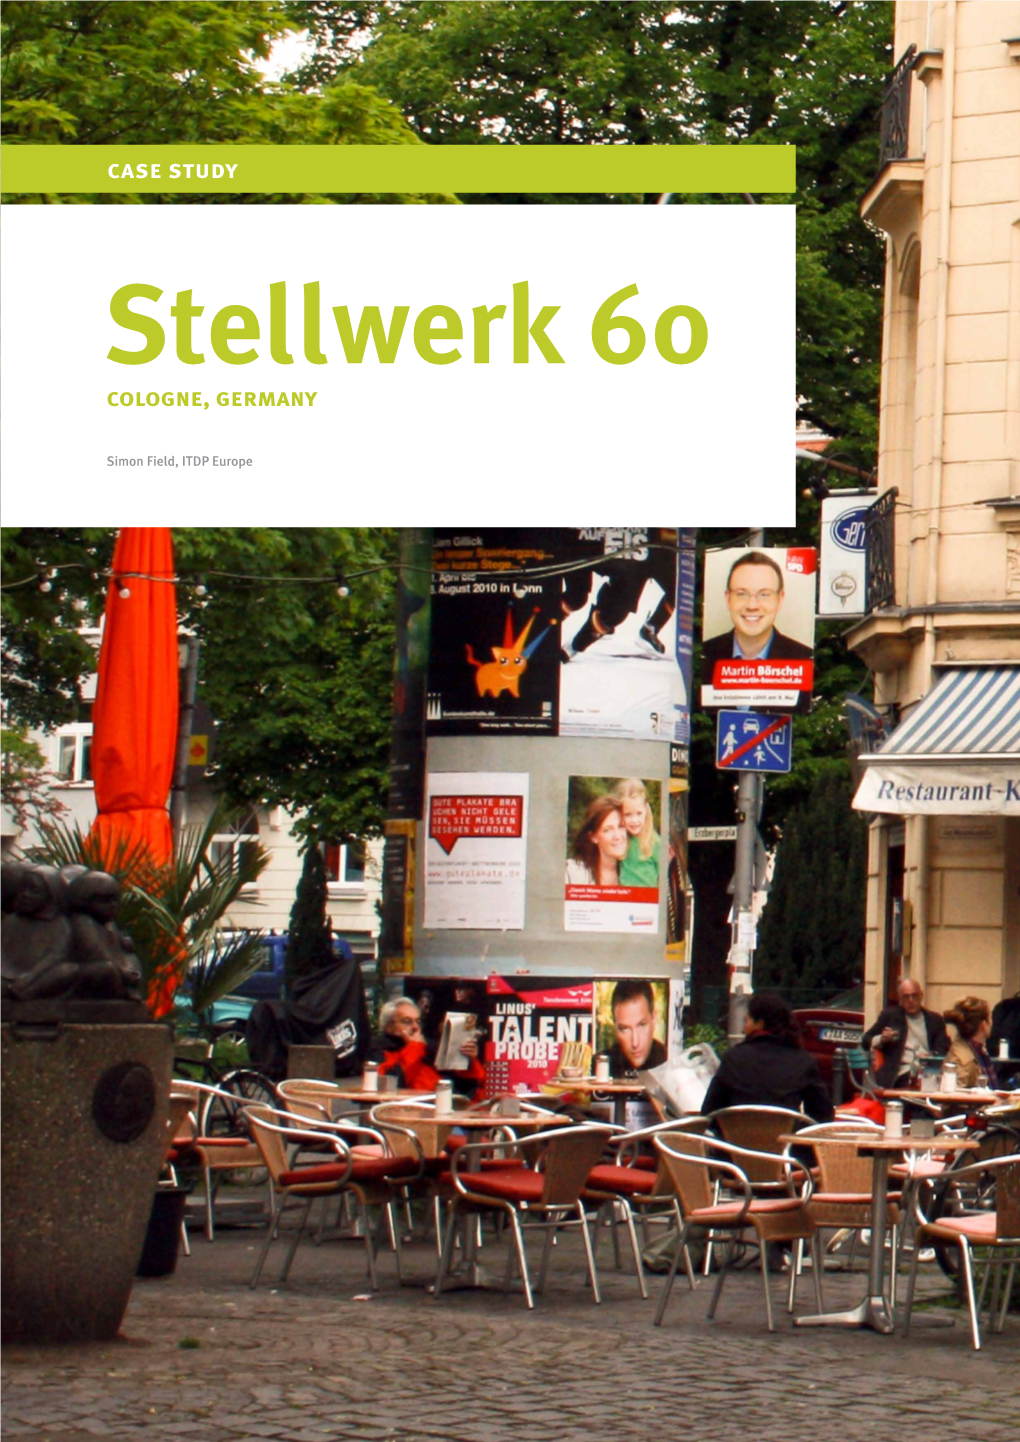 Stellwerk 60 Cologne, Germany